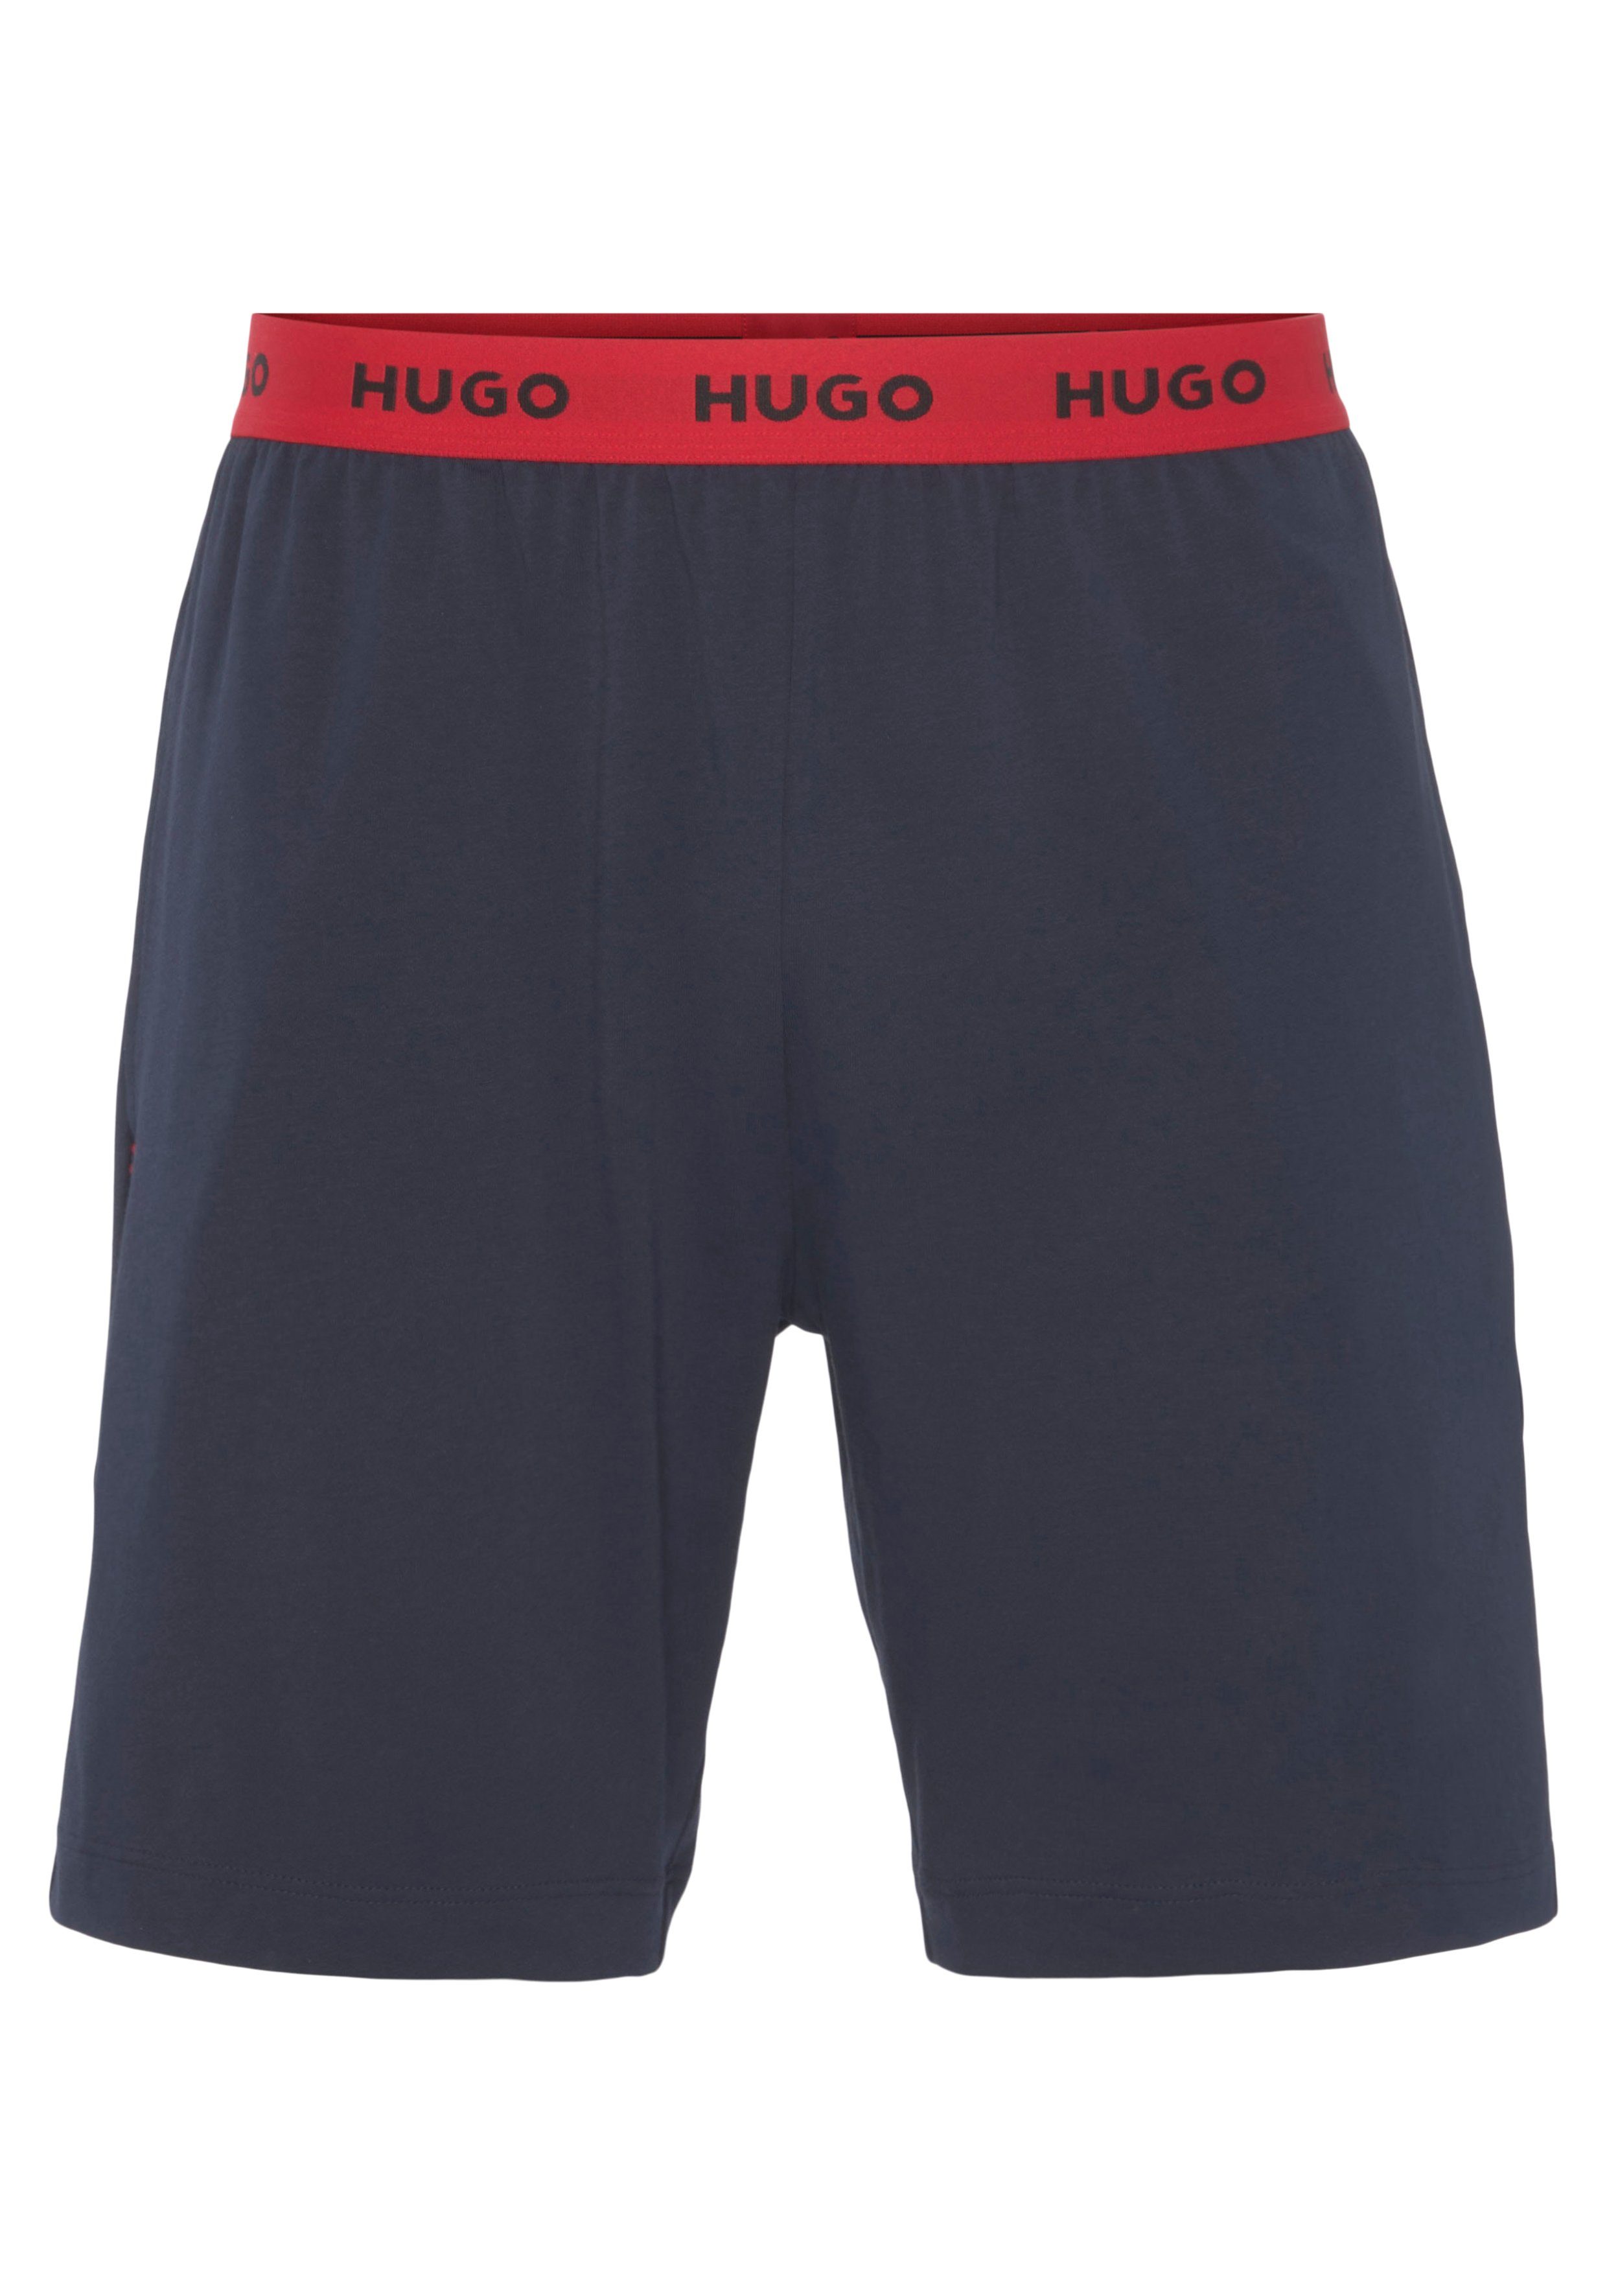 dark HUGO Linked Logobund blue Pant Sweatshorts 405 mit Short HUGO